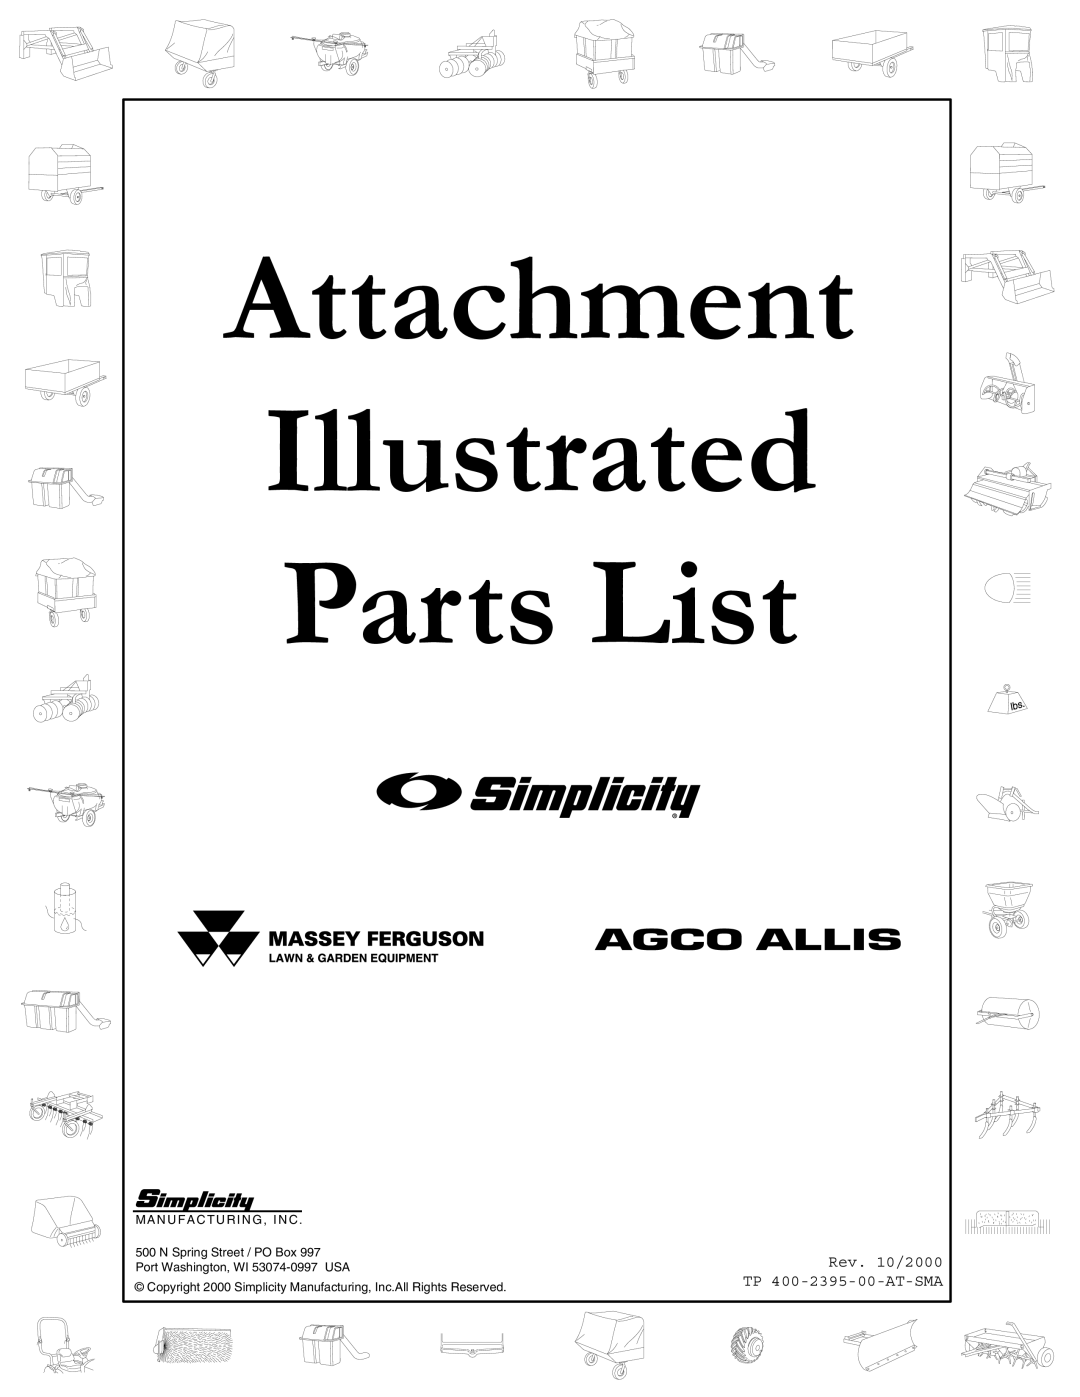 Snapper manual Attachment Illustrated Parts List, Rev. 10/2000 TP 400-2395-00-AT-SMA, Port Washington, WI 53074-0997USA 